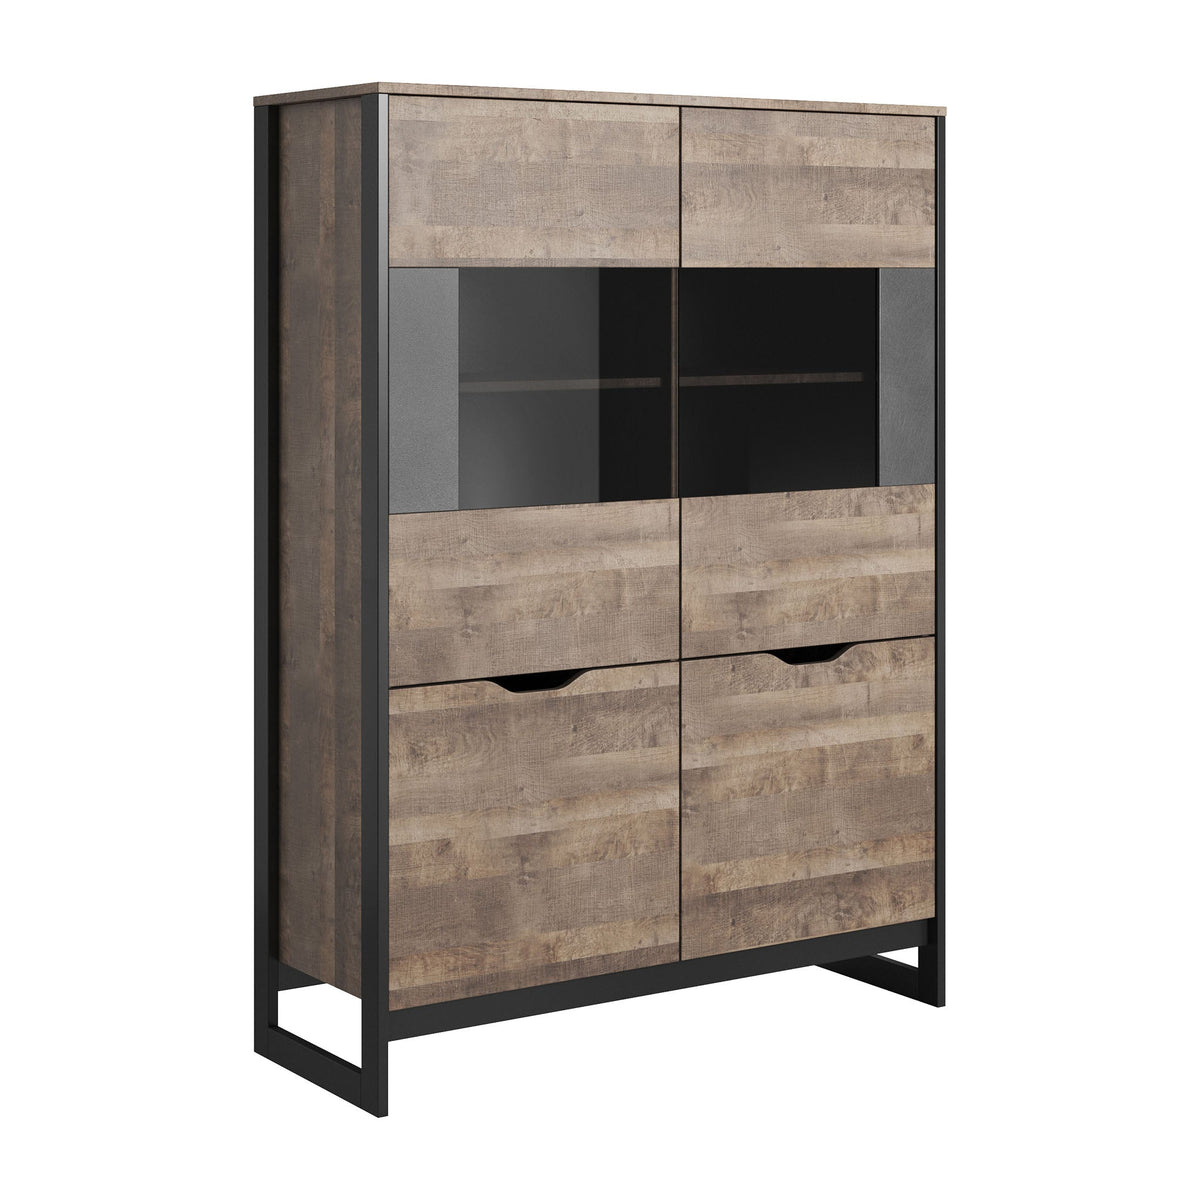 Ezra Industrial Oak Effect Display Cabinet with Storage